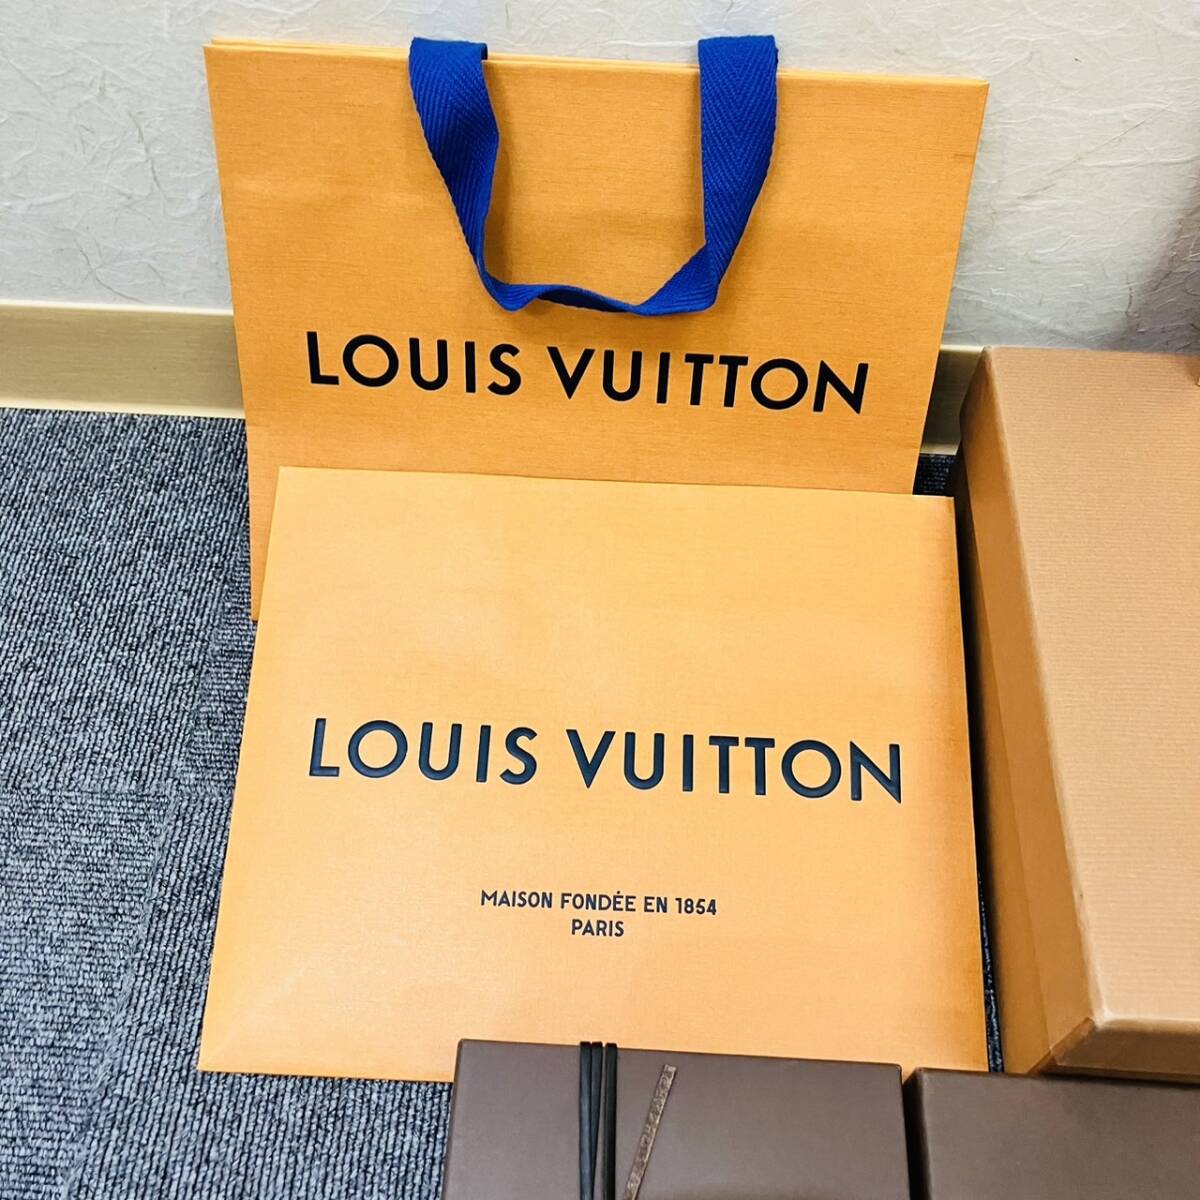 [EKA-23.5MY]1 jpy ~ LOUIS VUITTON Louis Vuitton HERMES Hermes GUCCI Gucci TIFFANY Tiffany shopping bag summarize secondhand goods long-term keeping goods 